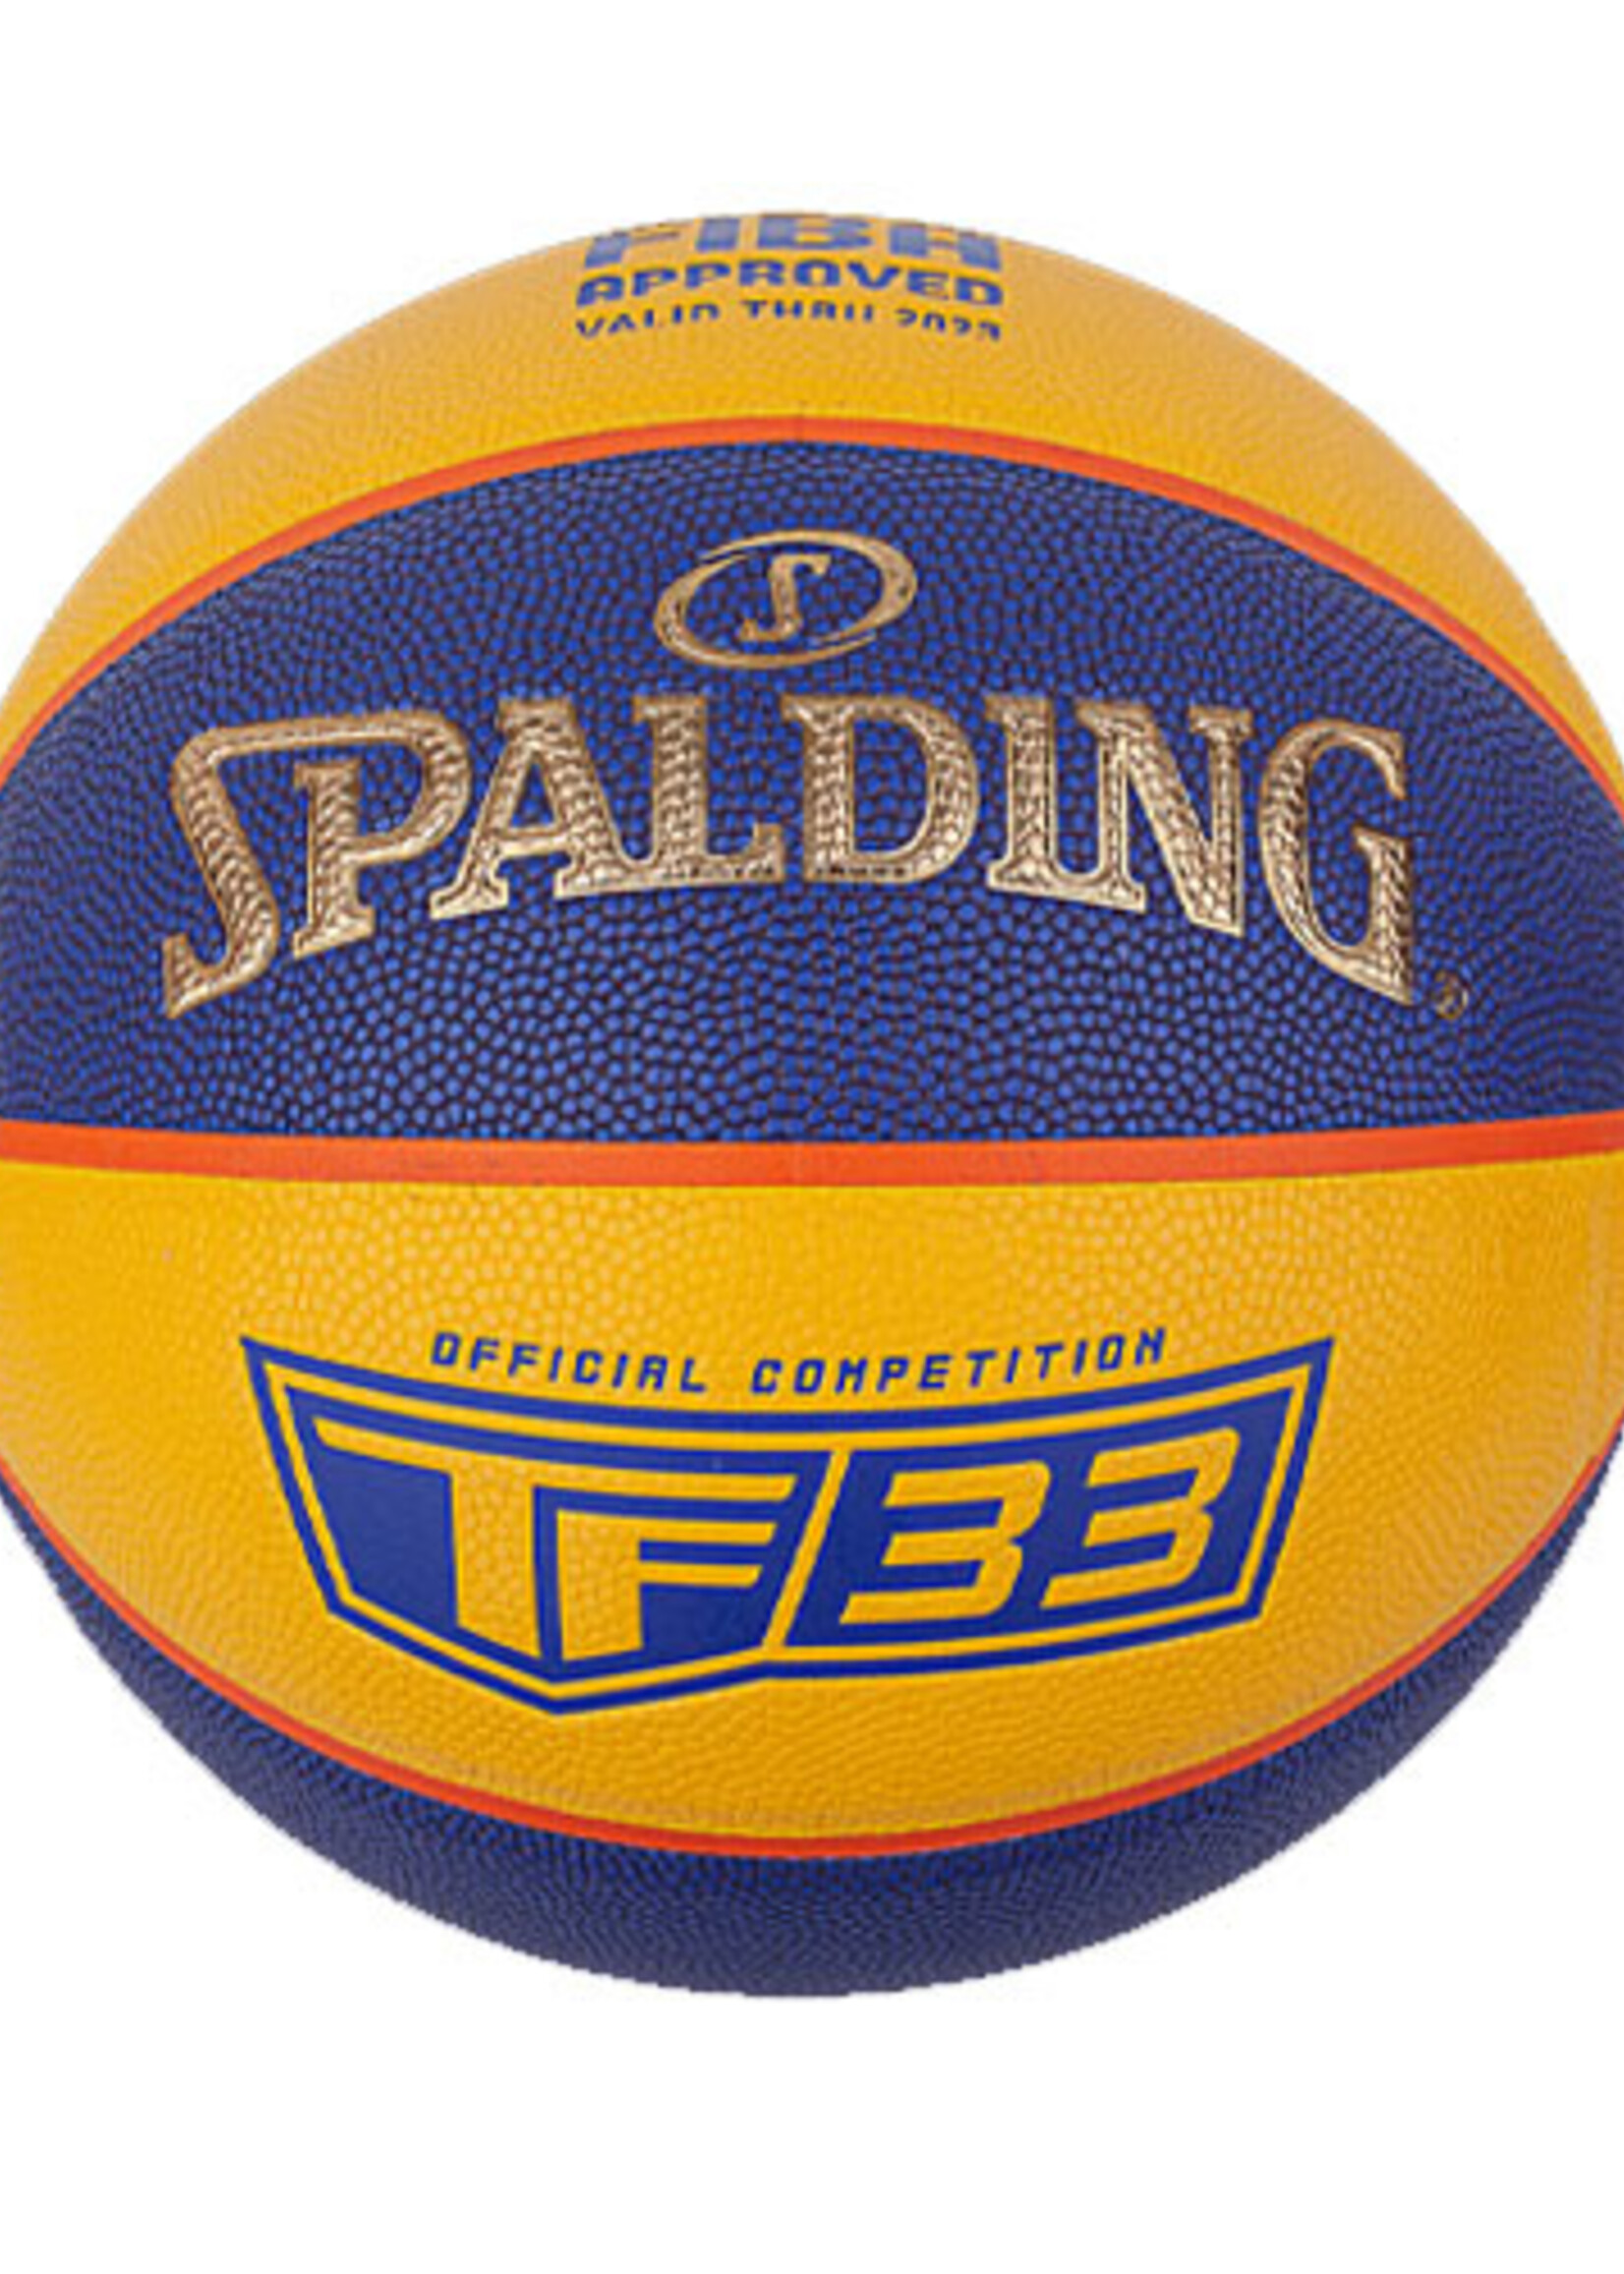 Spalding Spalding TF-33 Gold Composite Basketball